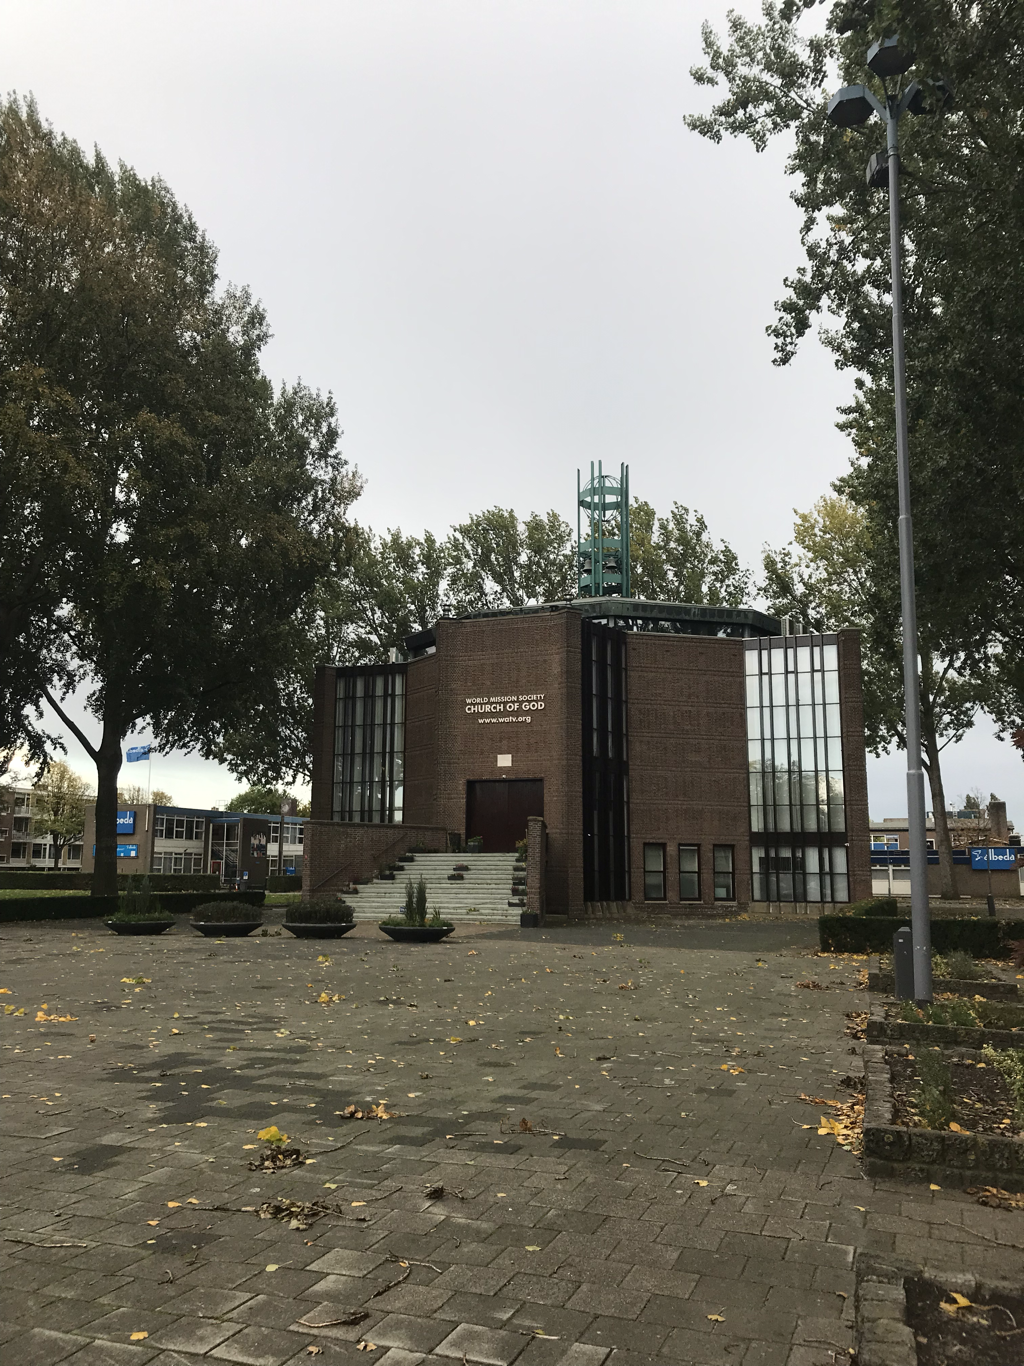 World mission society church of god in Rotterdam